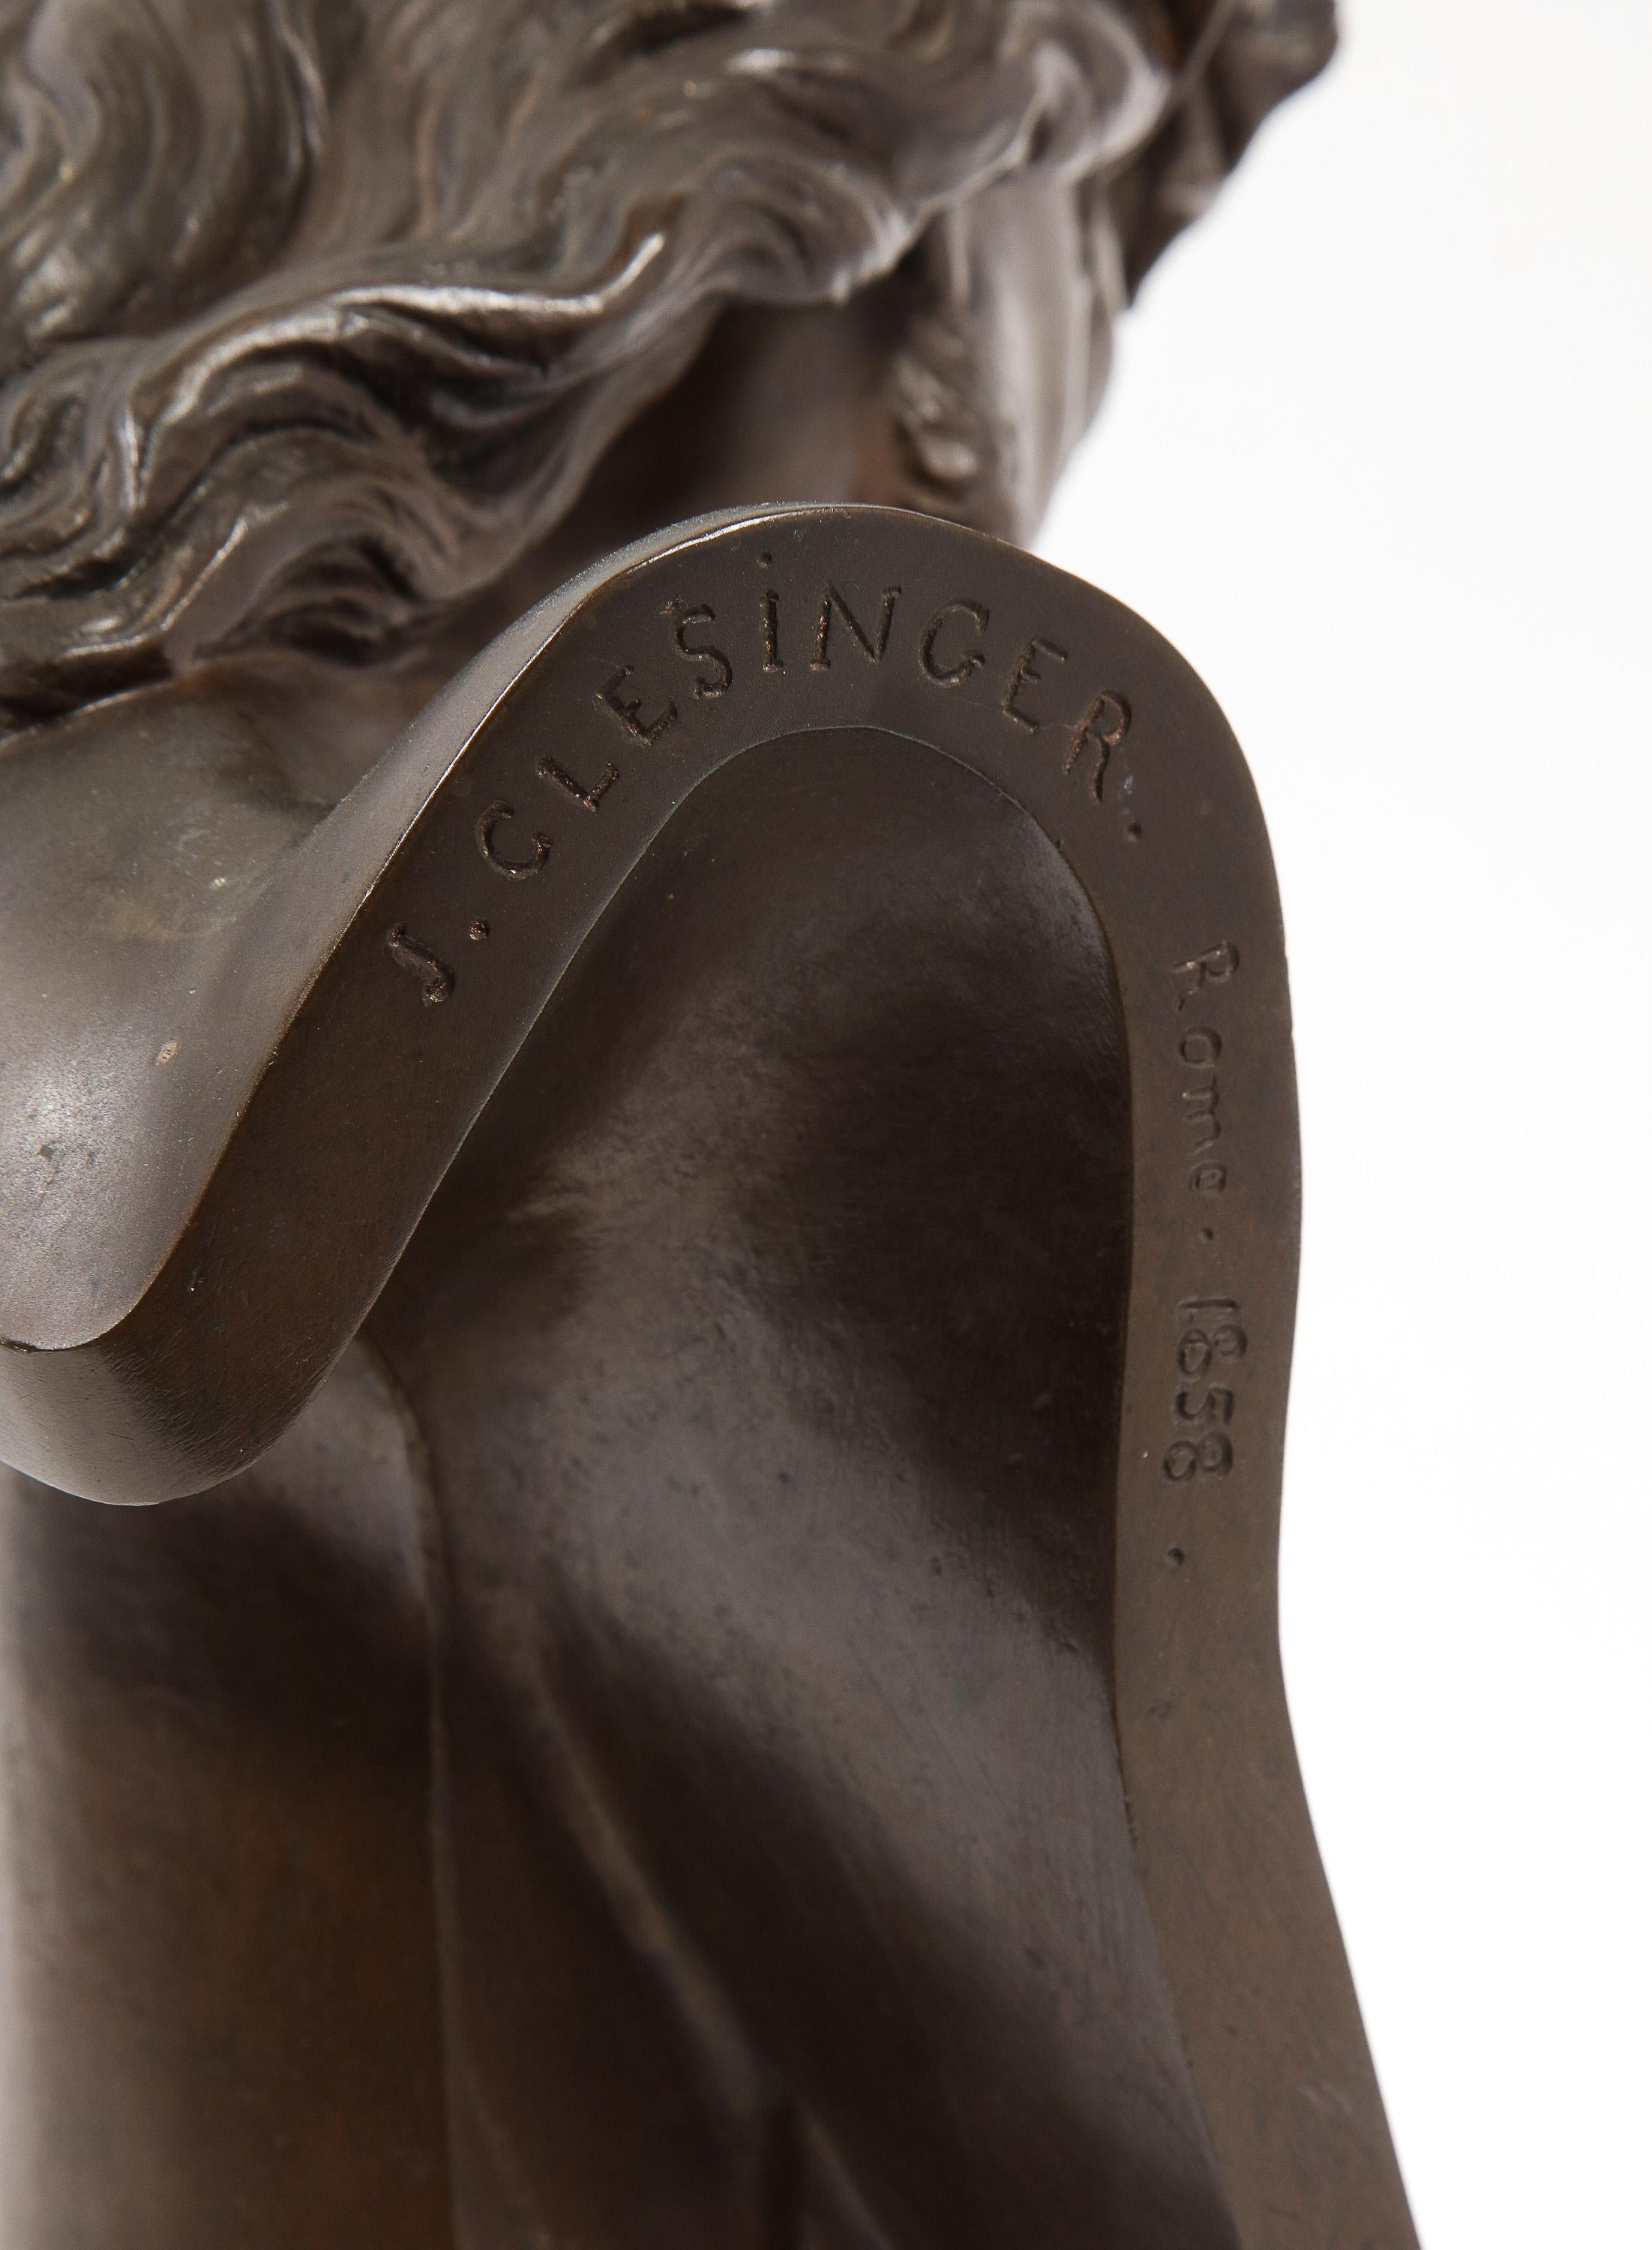 Jean-Baptiste Auguste Clesinger, French Bronze Bust of Jesus Christ, Barbedienne 8